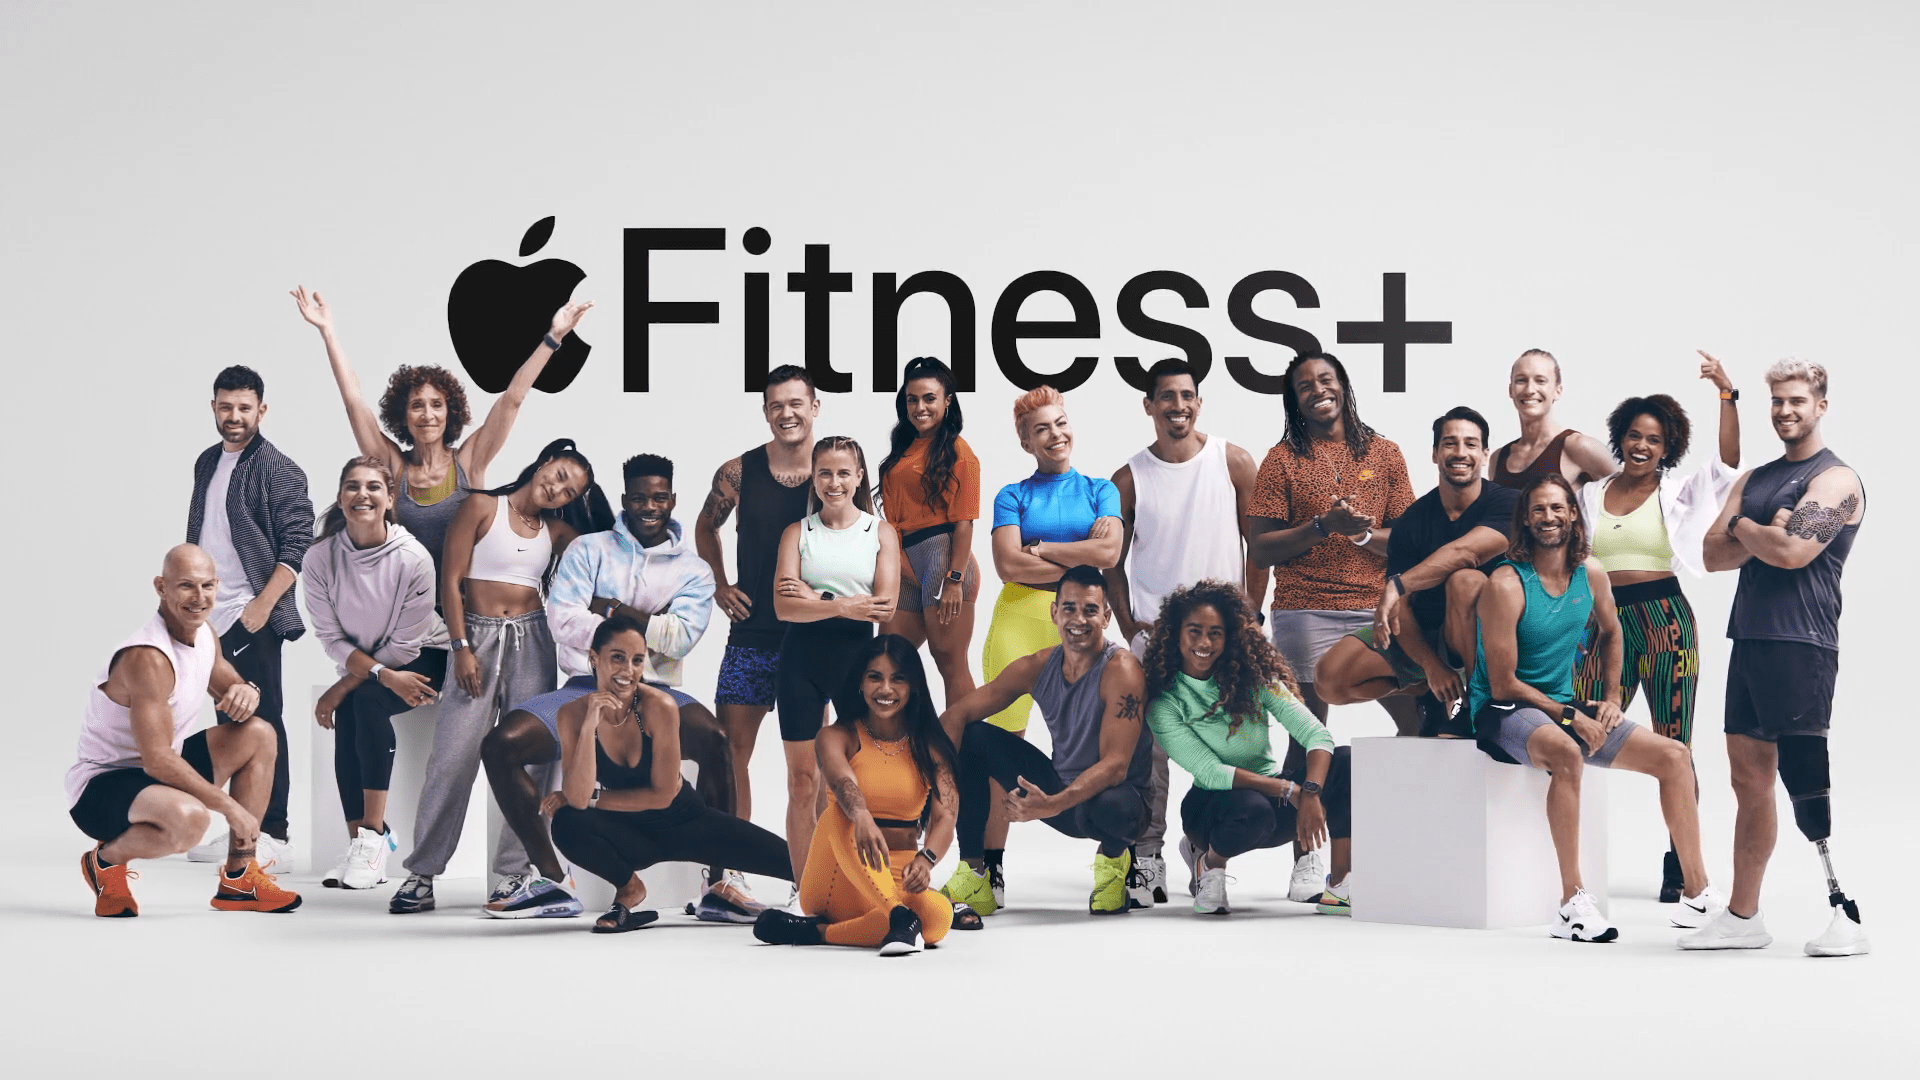 Apple Fitness +